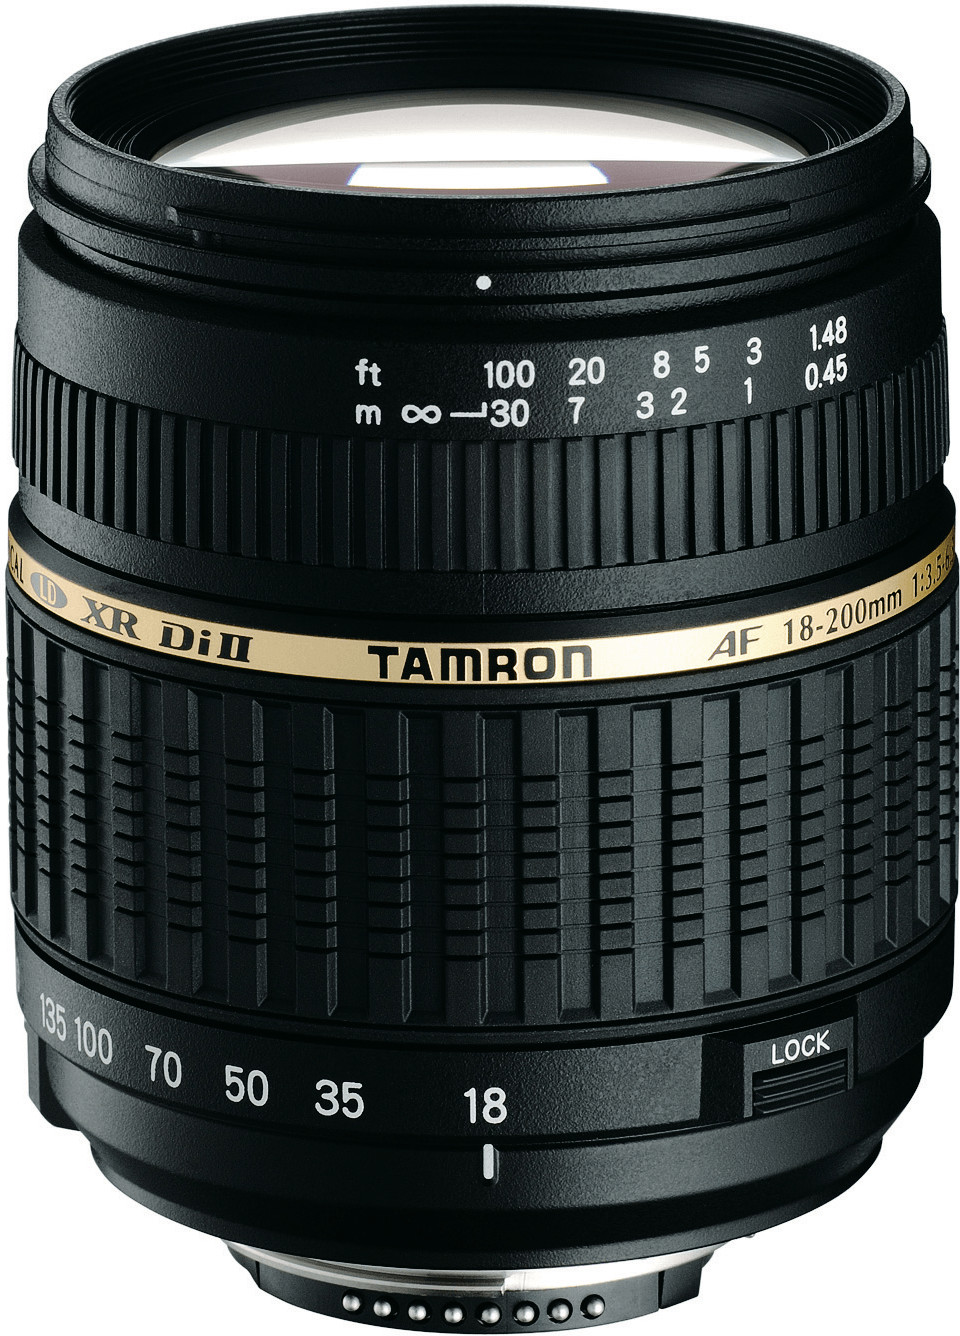 TAMRON AF 18-200mm F 3.5-6.3 Di II Canon - レンズ(ズーム)